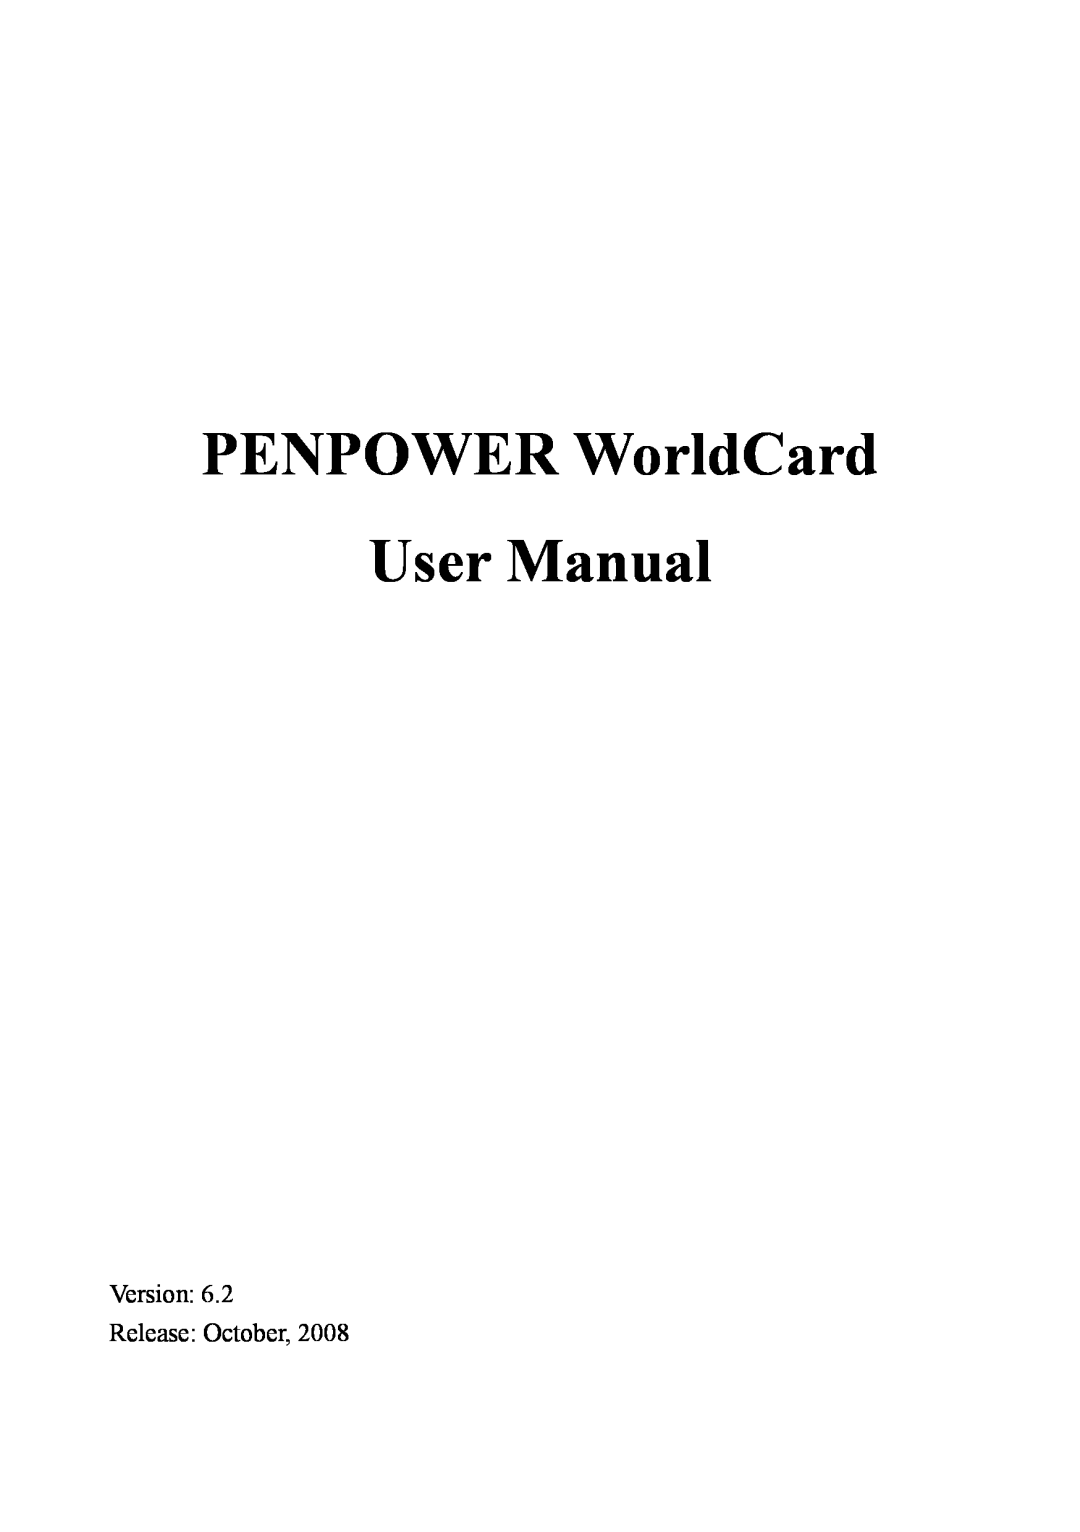 Penpower duet 2 user manual PENPOWER WorldCard, User Manual, Version: Release: October 